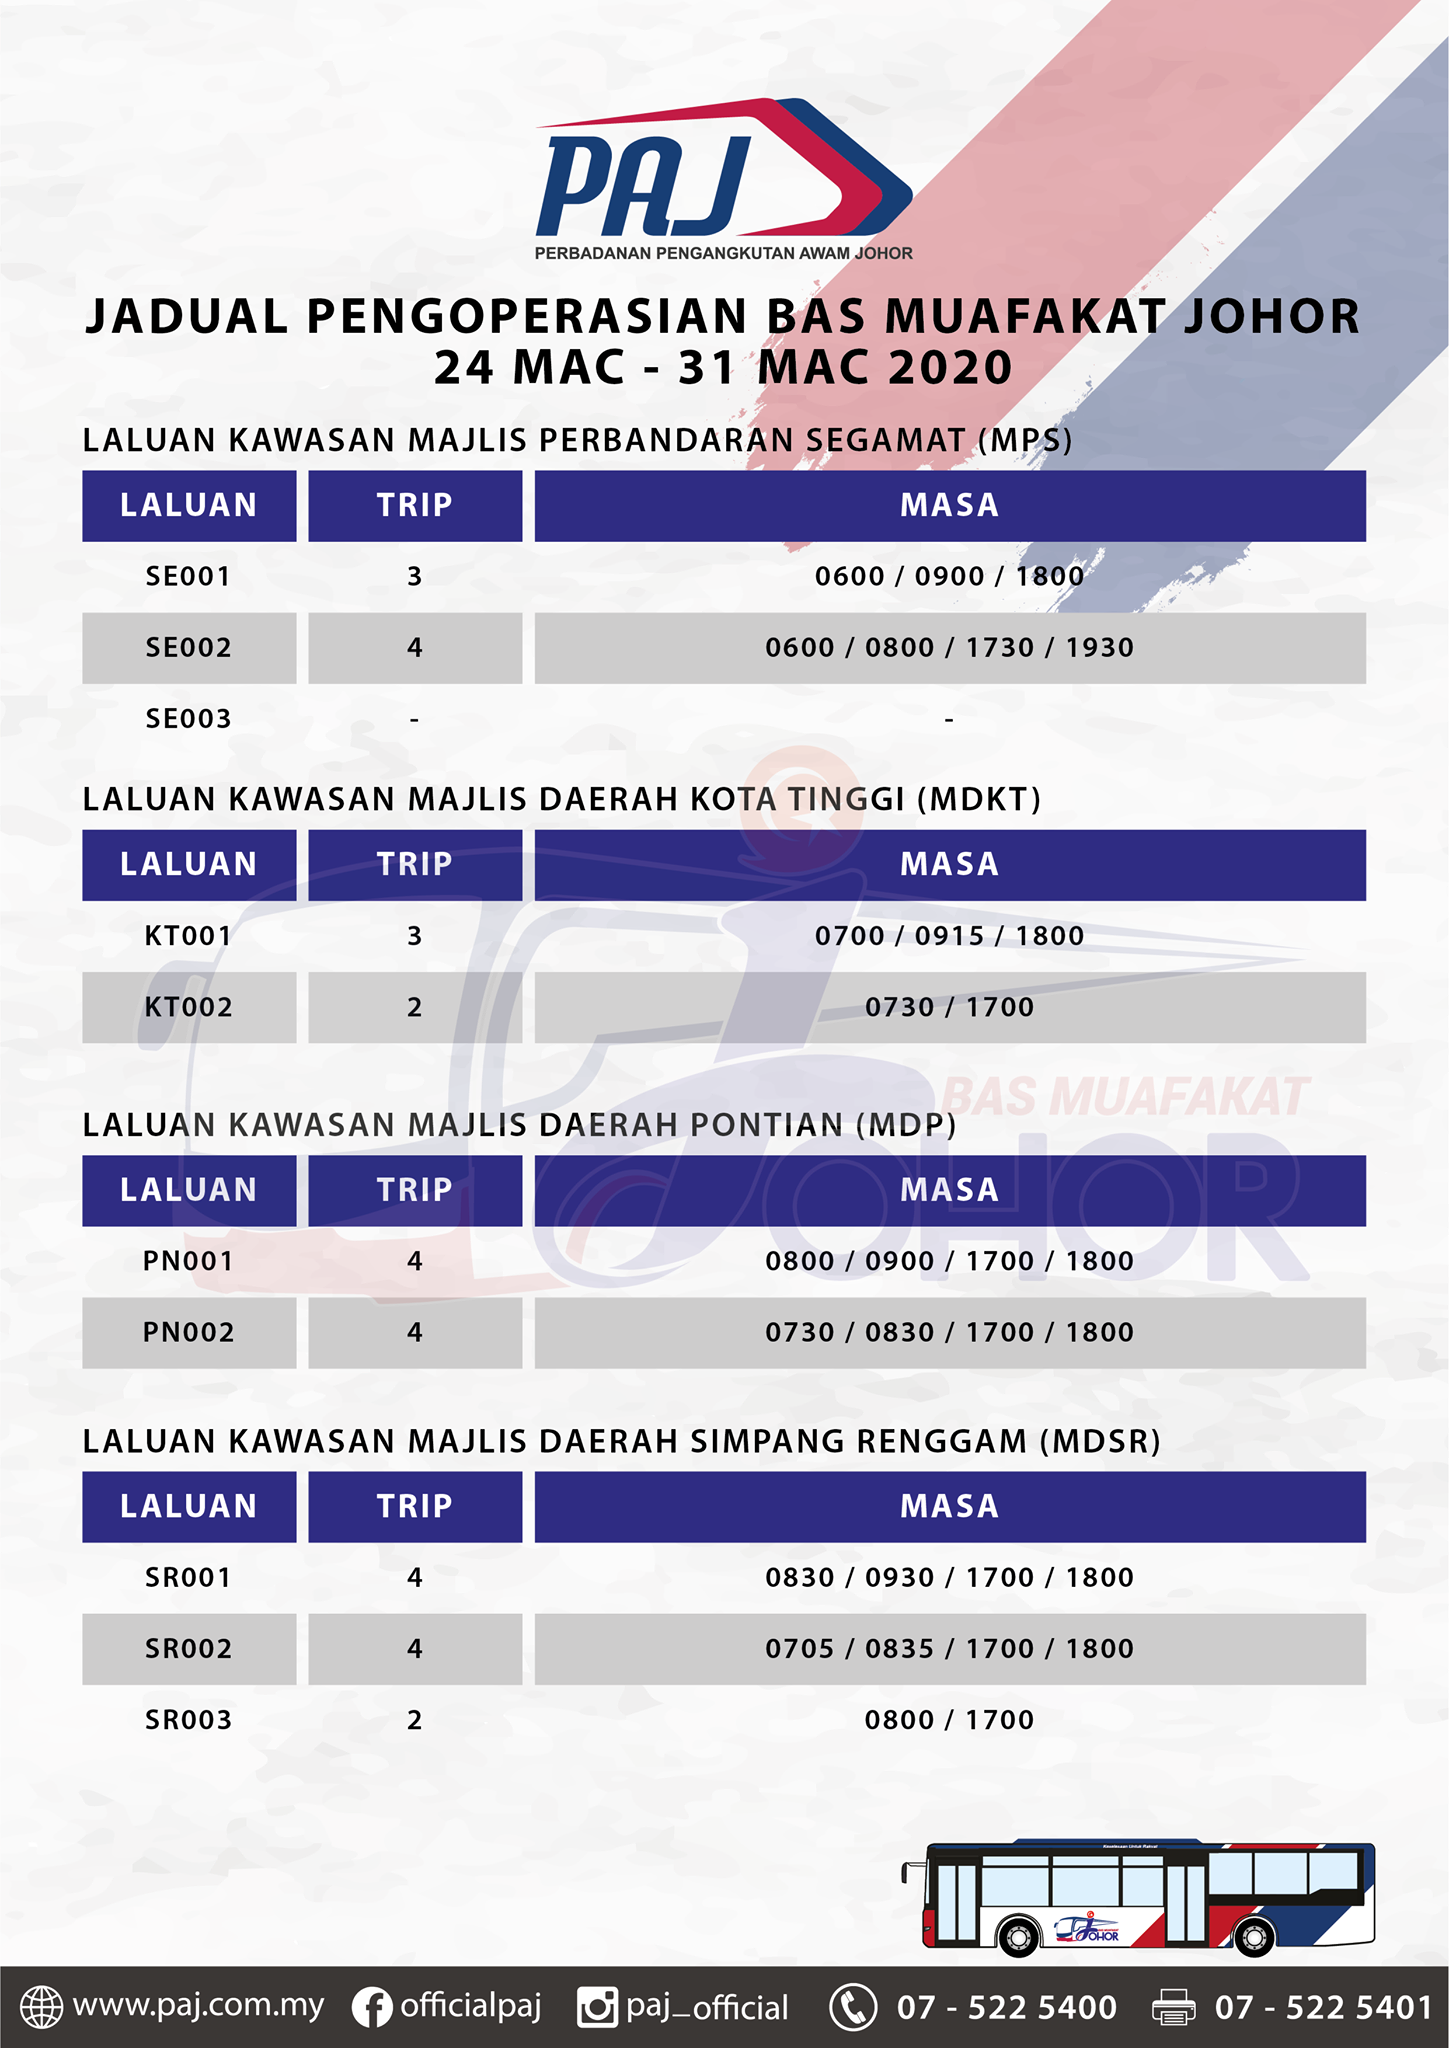 Official PAJ poster on the change in operation hours of Bas Muafakat Johor bus services in Segamat, Kota Tinggi, Pontian and Simpang Renggam districts